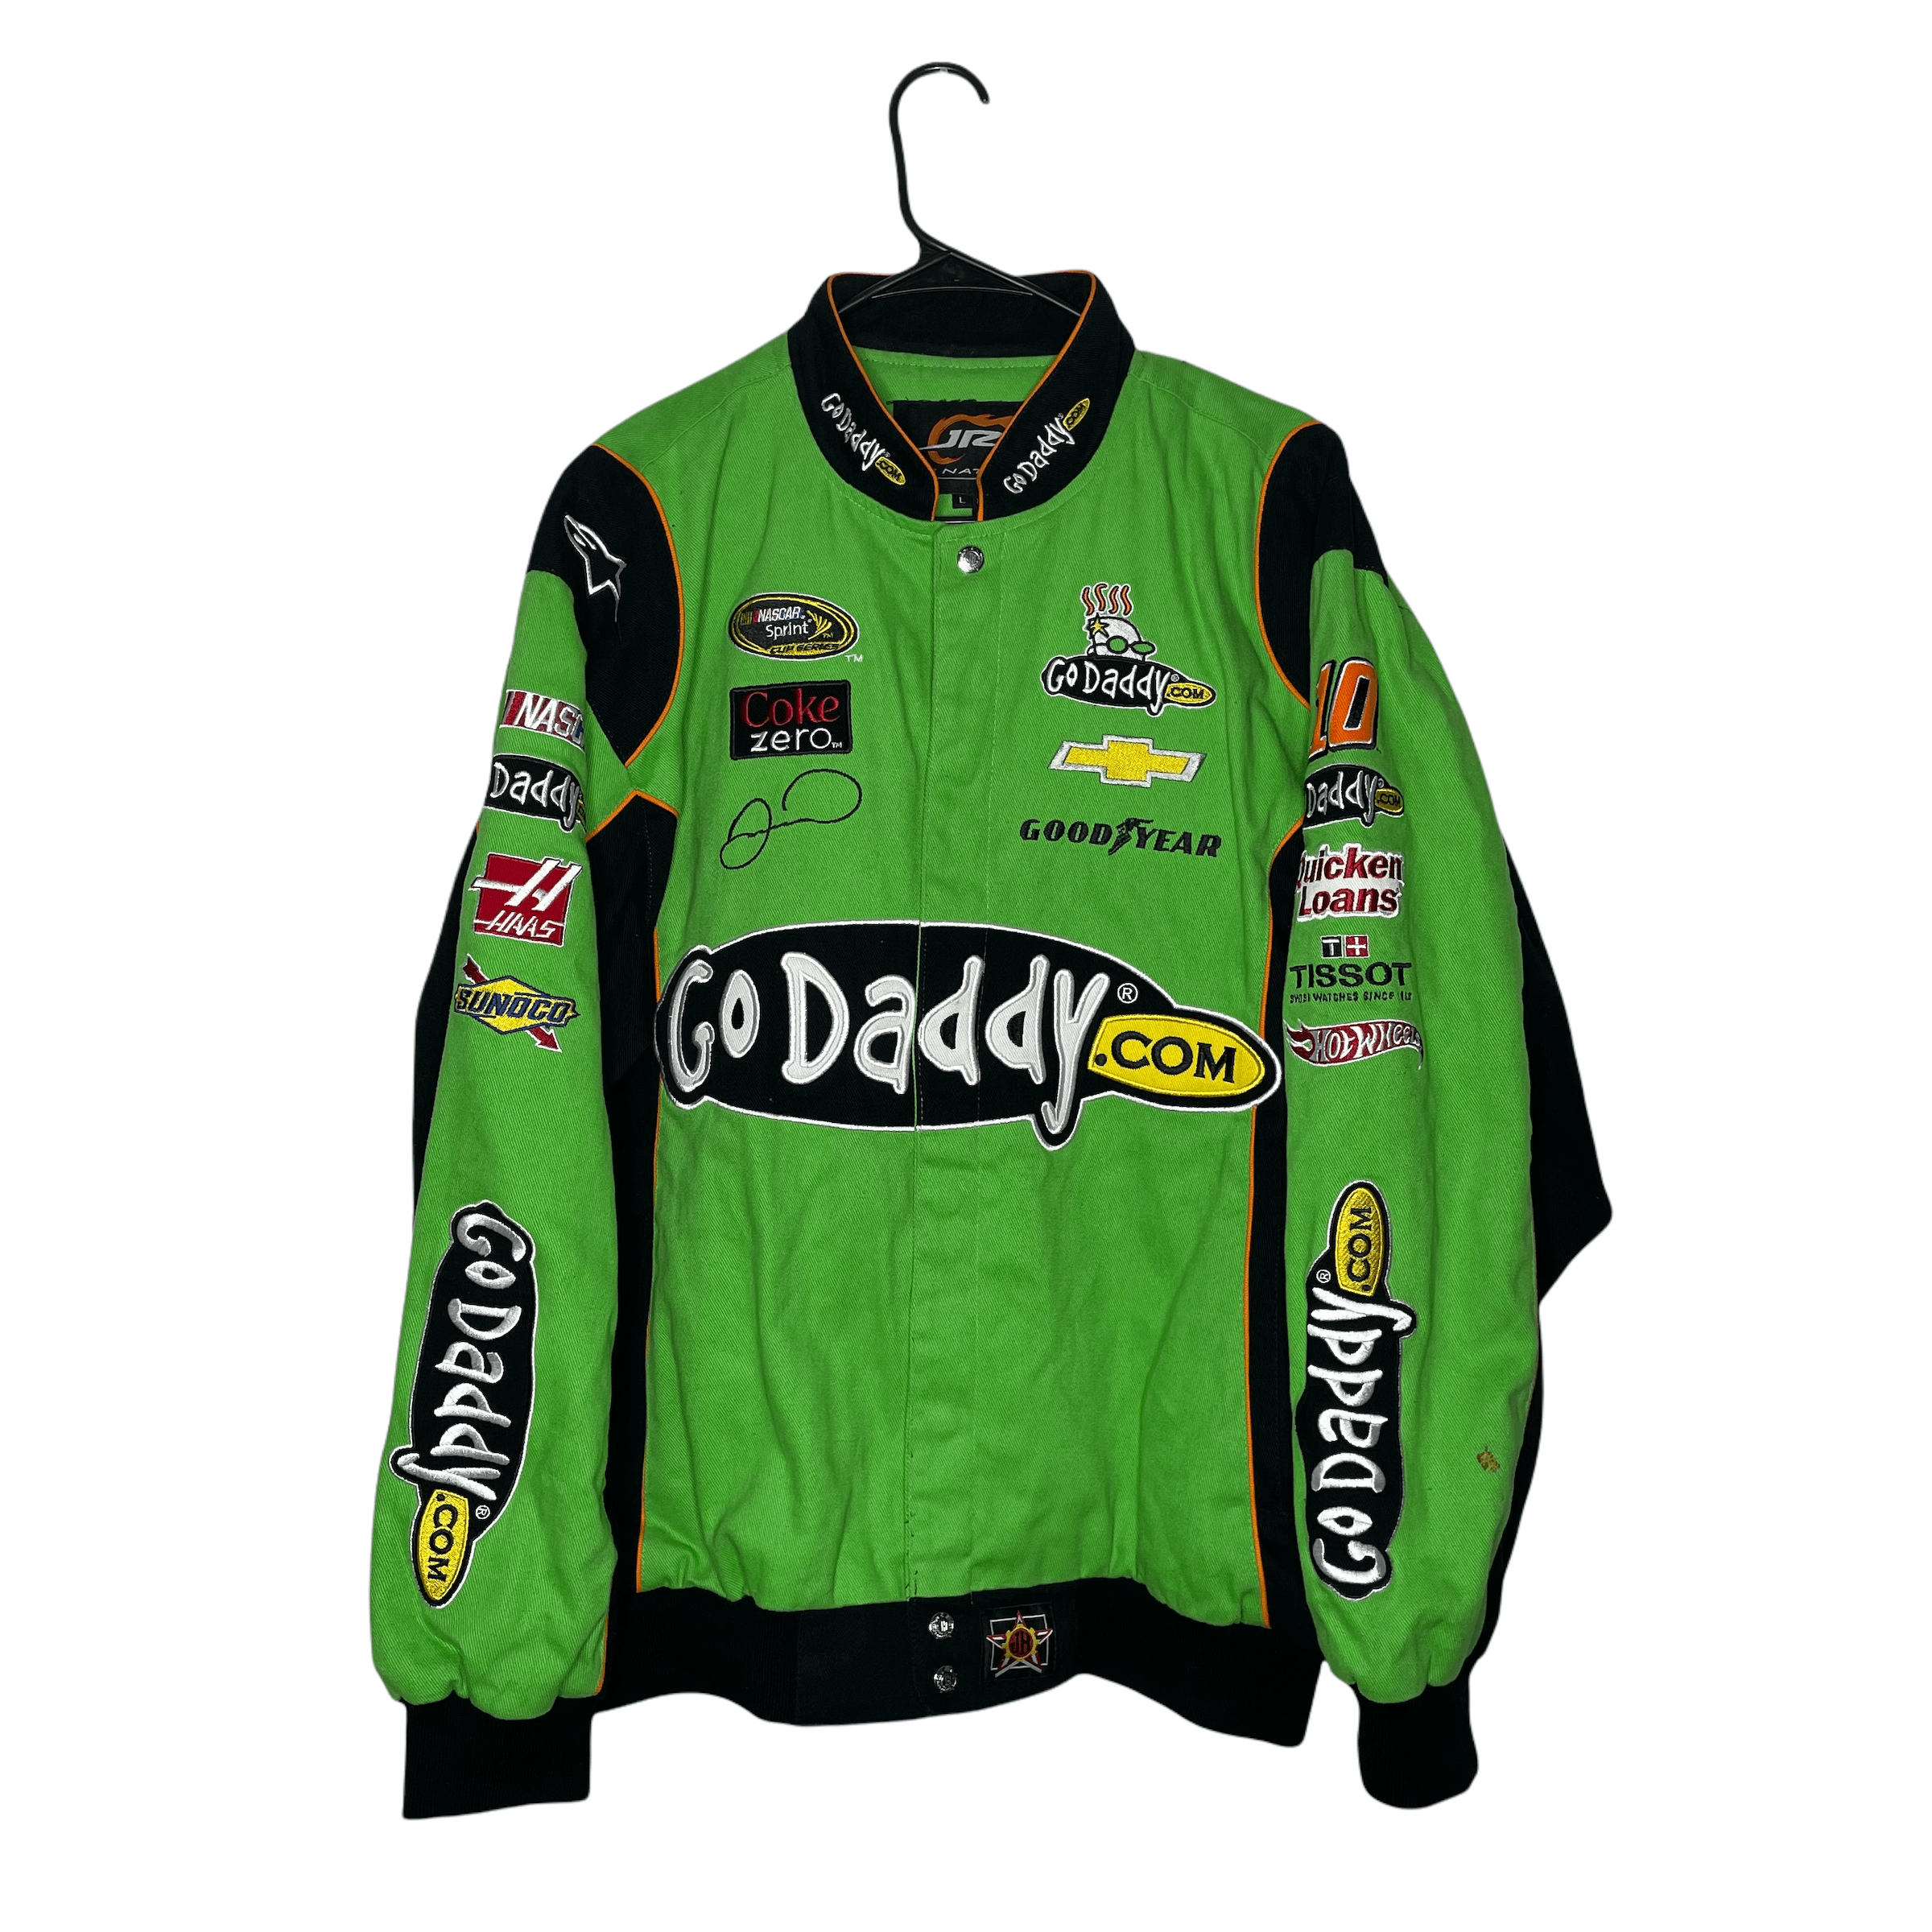 NASCAR Danica Patrick GoDaddy NASCAR Jacket. | Grailed